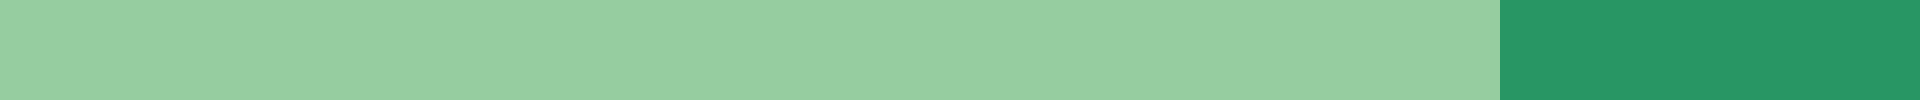 A visual bar of two shades of green.